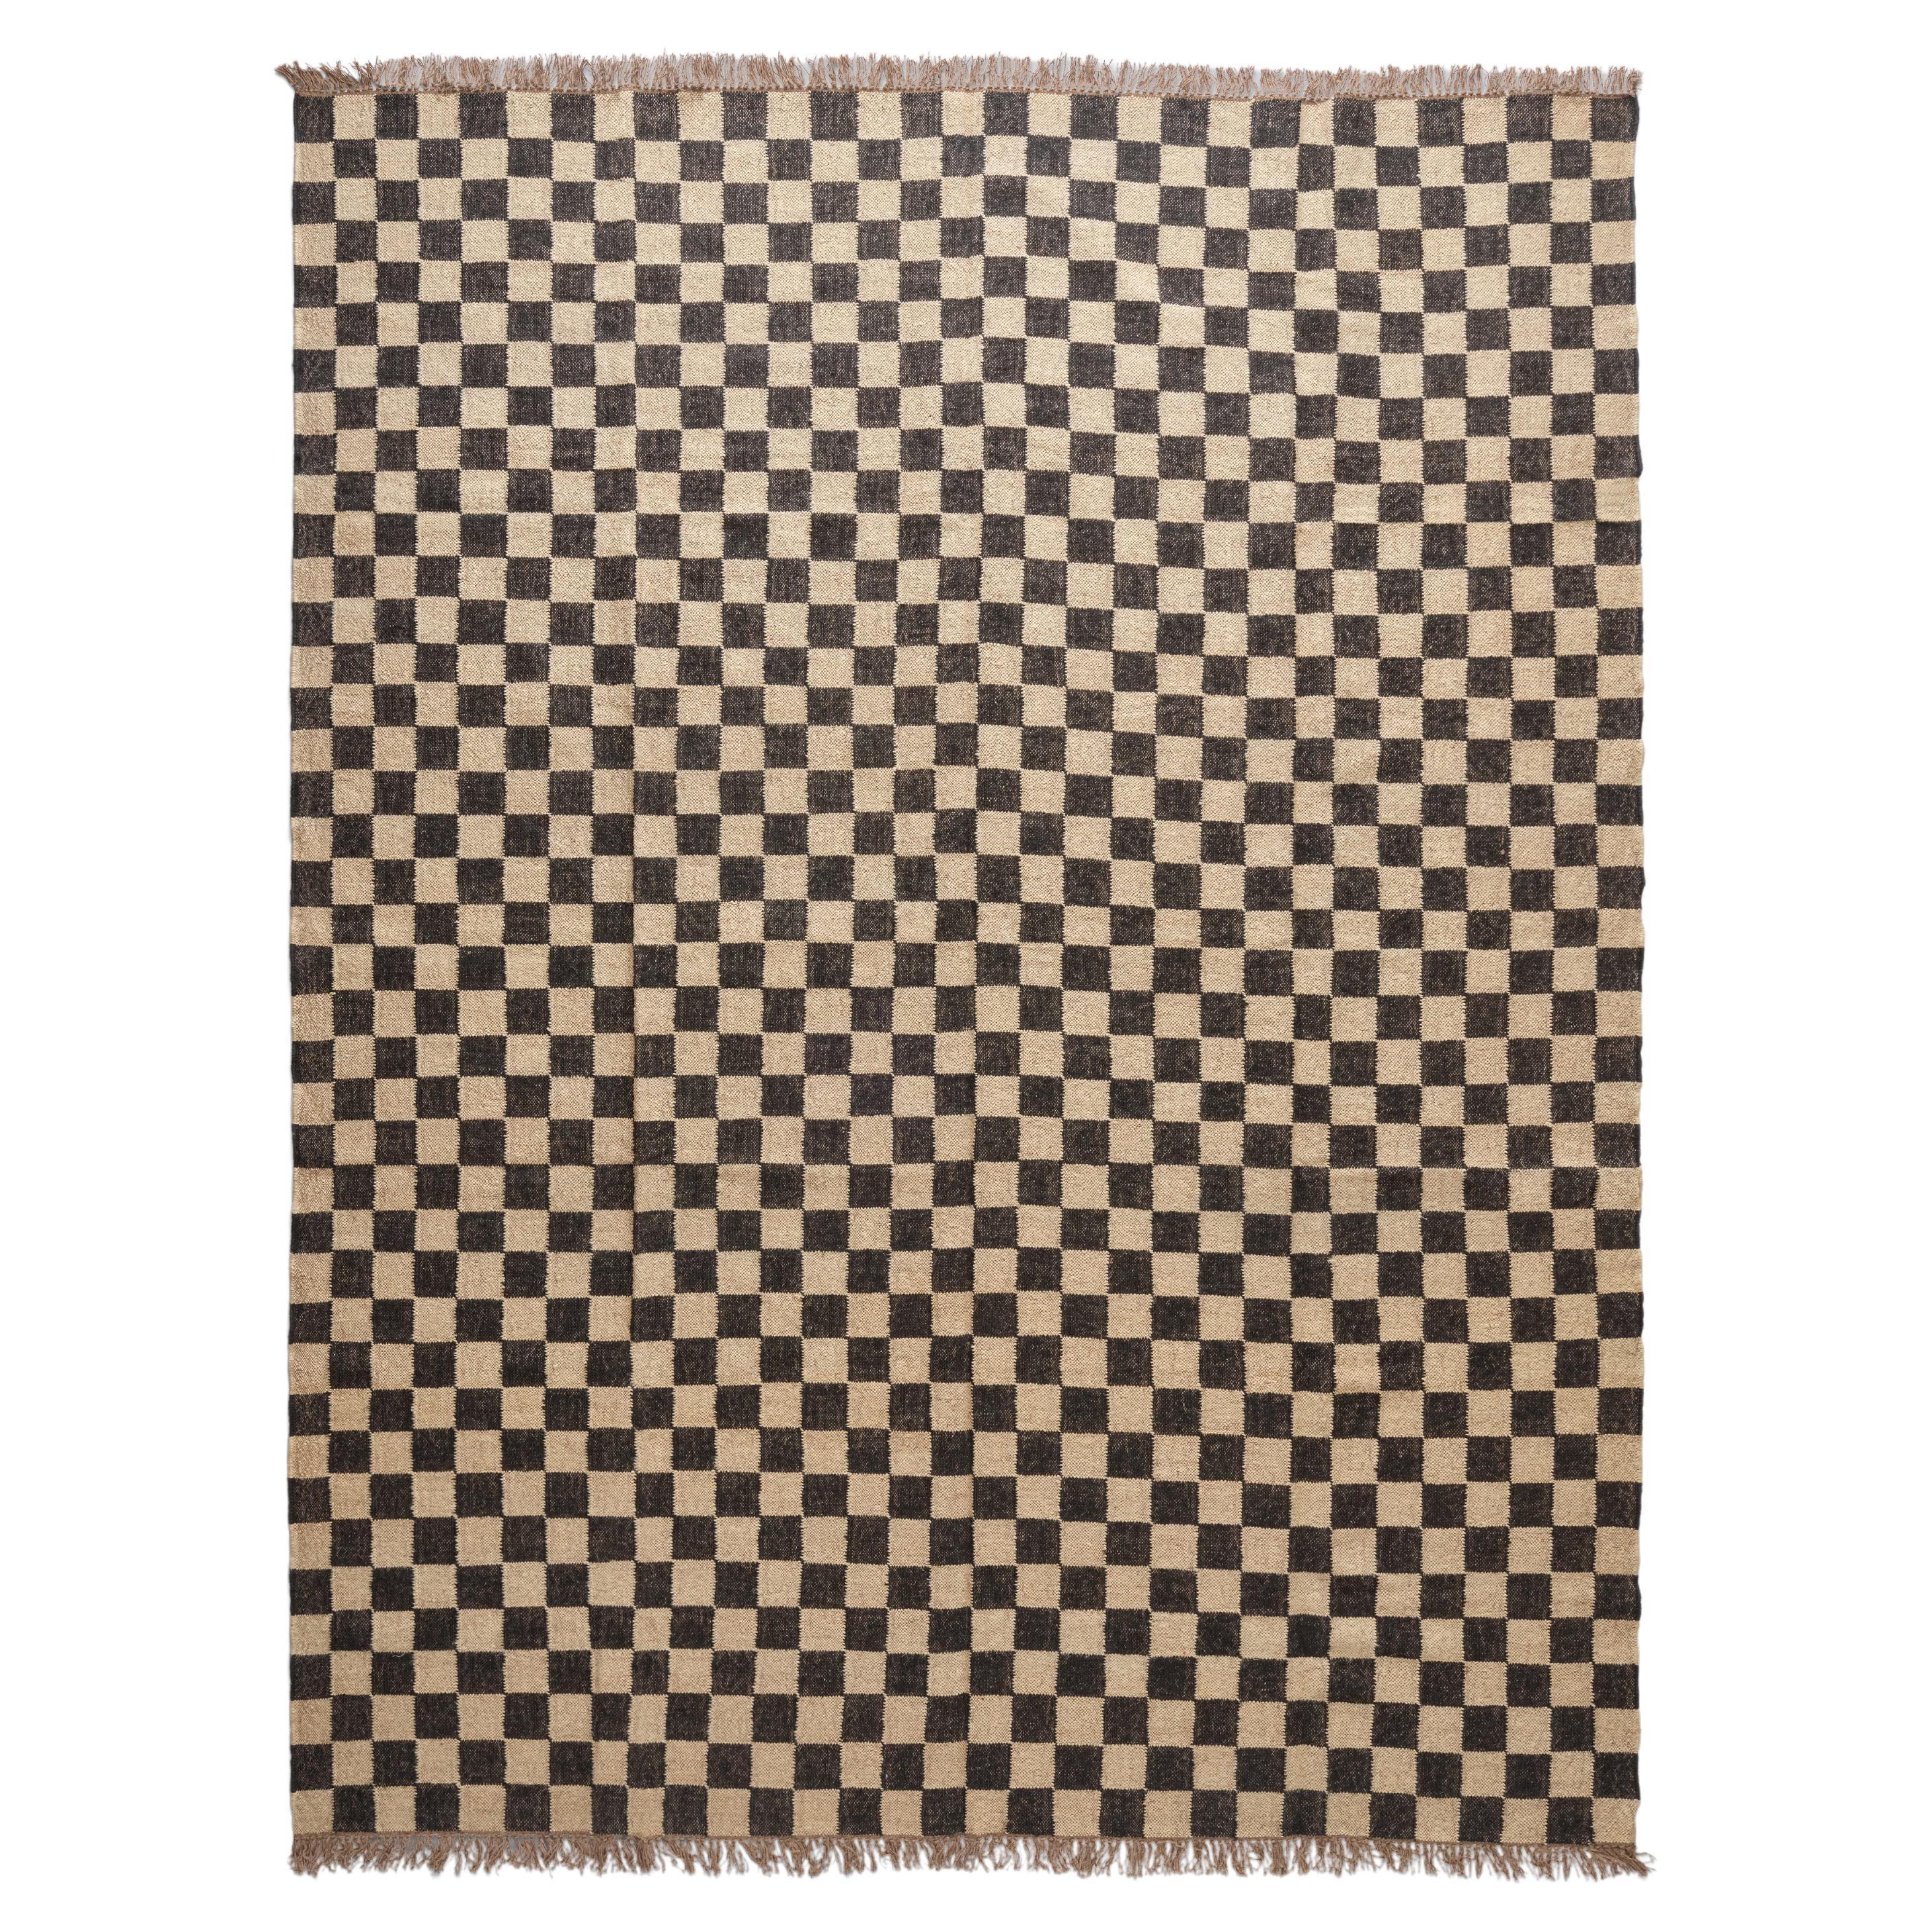 The Forsyth Checkerboard Rug - Off Black, 8x10